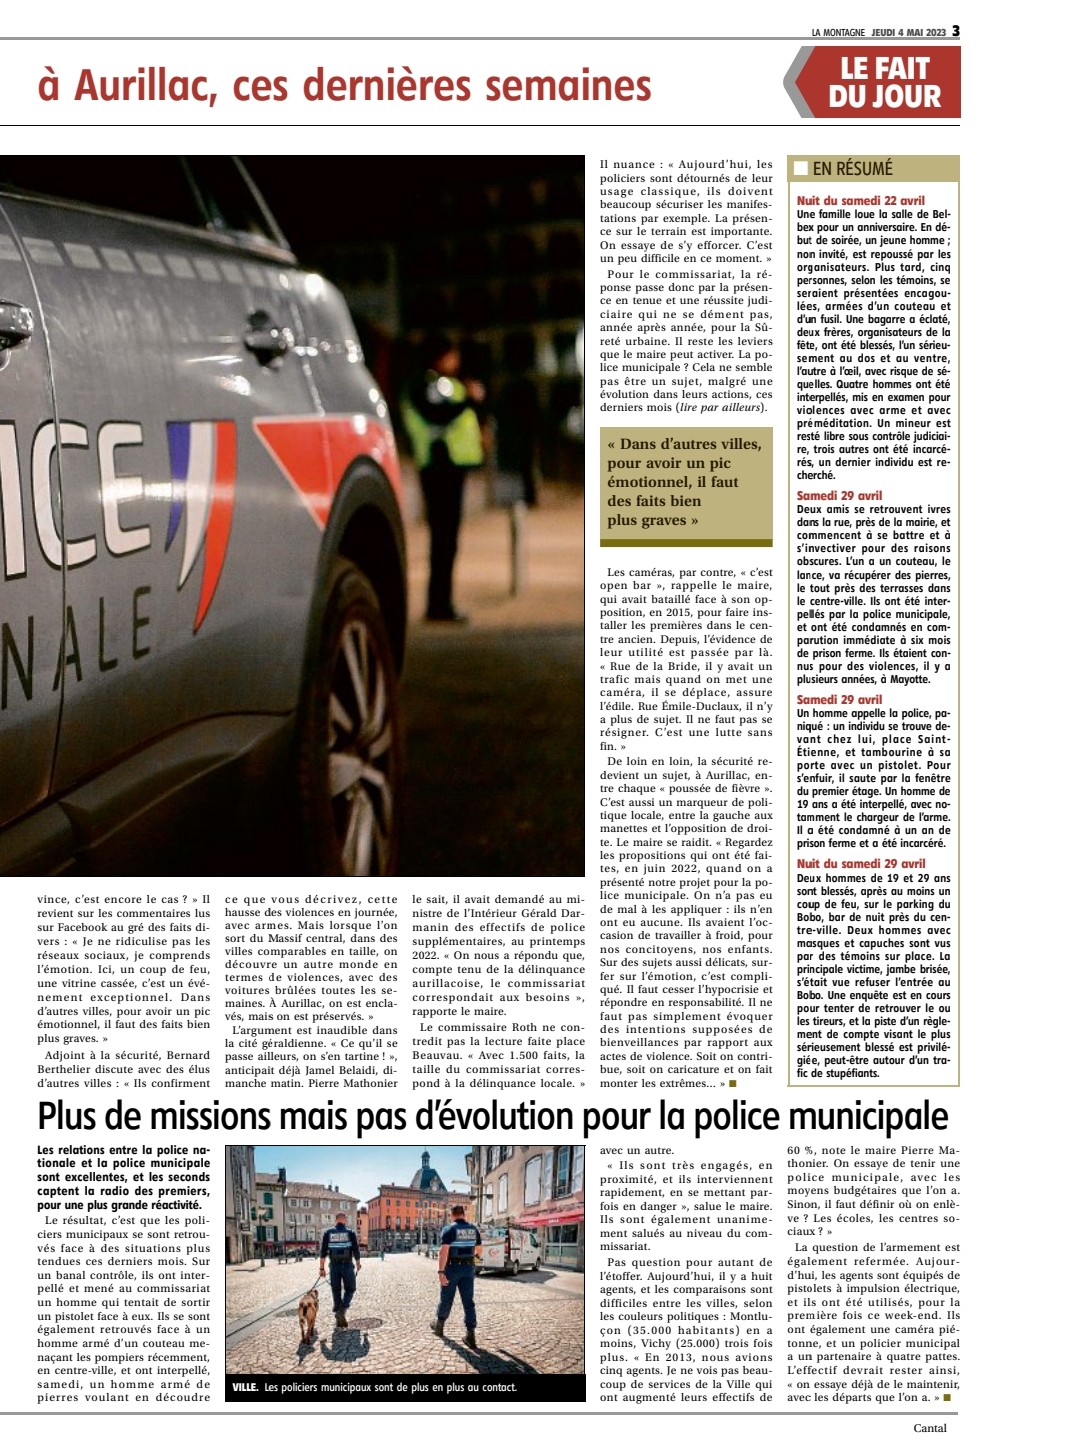 SmartSelect_20230505_082351_Centre France - Le Journal.jpg